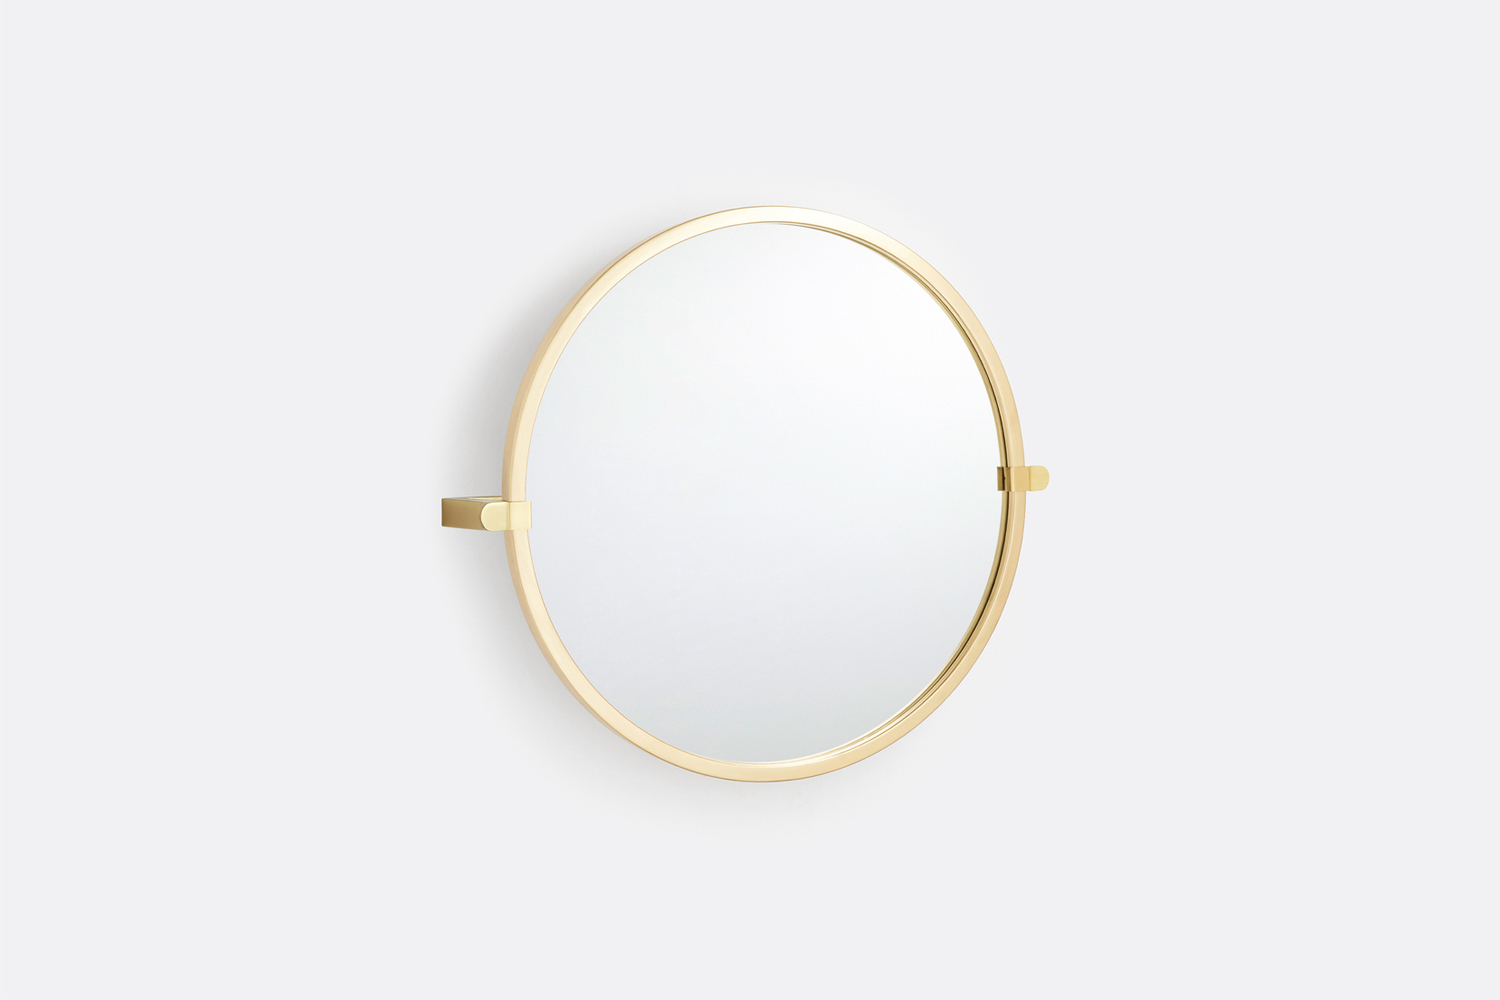 the rejuvenation bowman round pivot mirror in aged brass is $415. 16